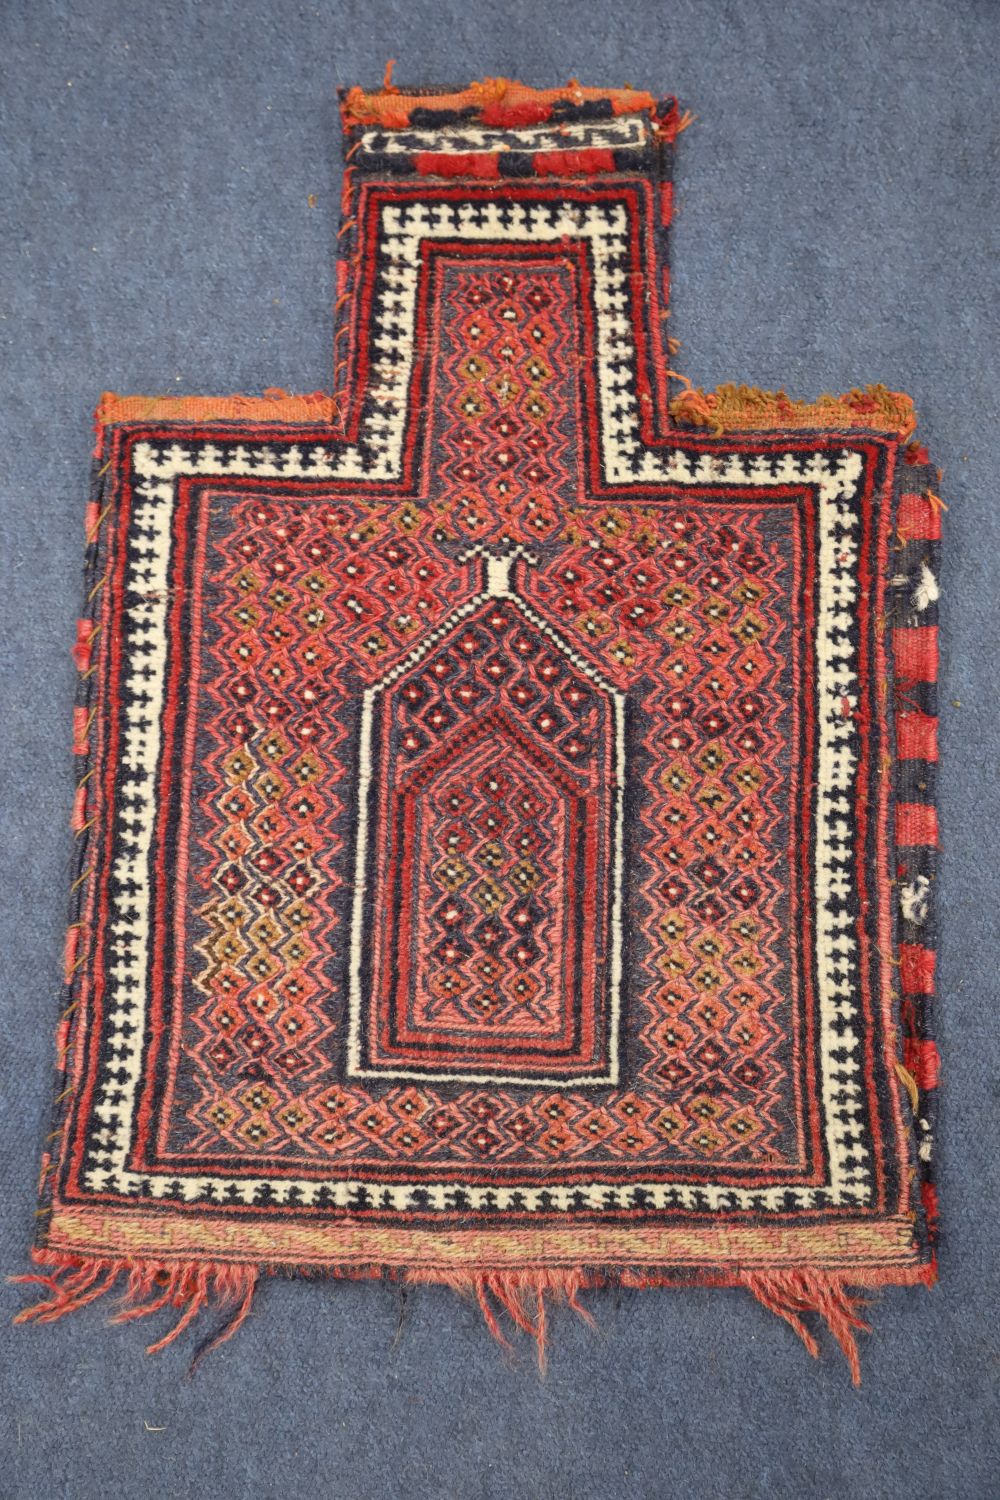 Two Afghan salt bags, a similar saddle bag and a Caucasian rug (4)